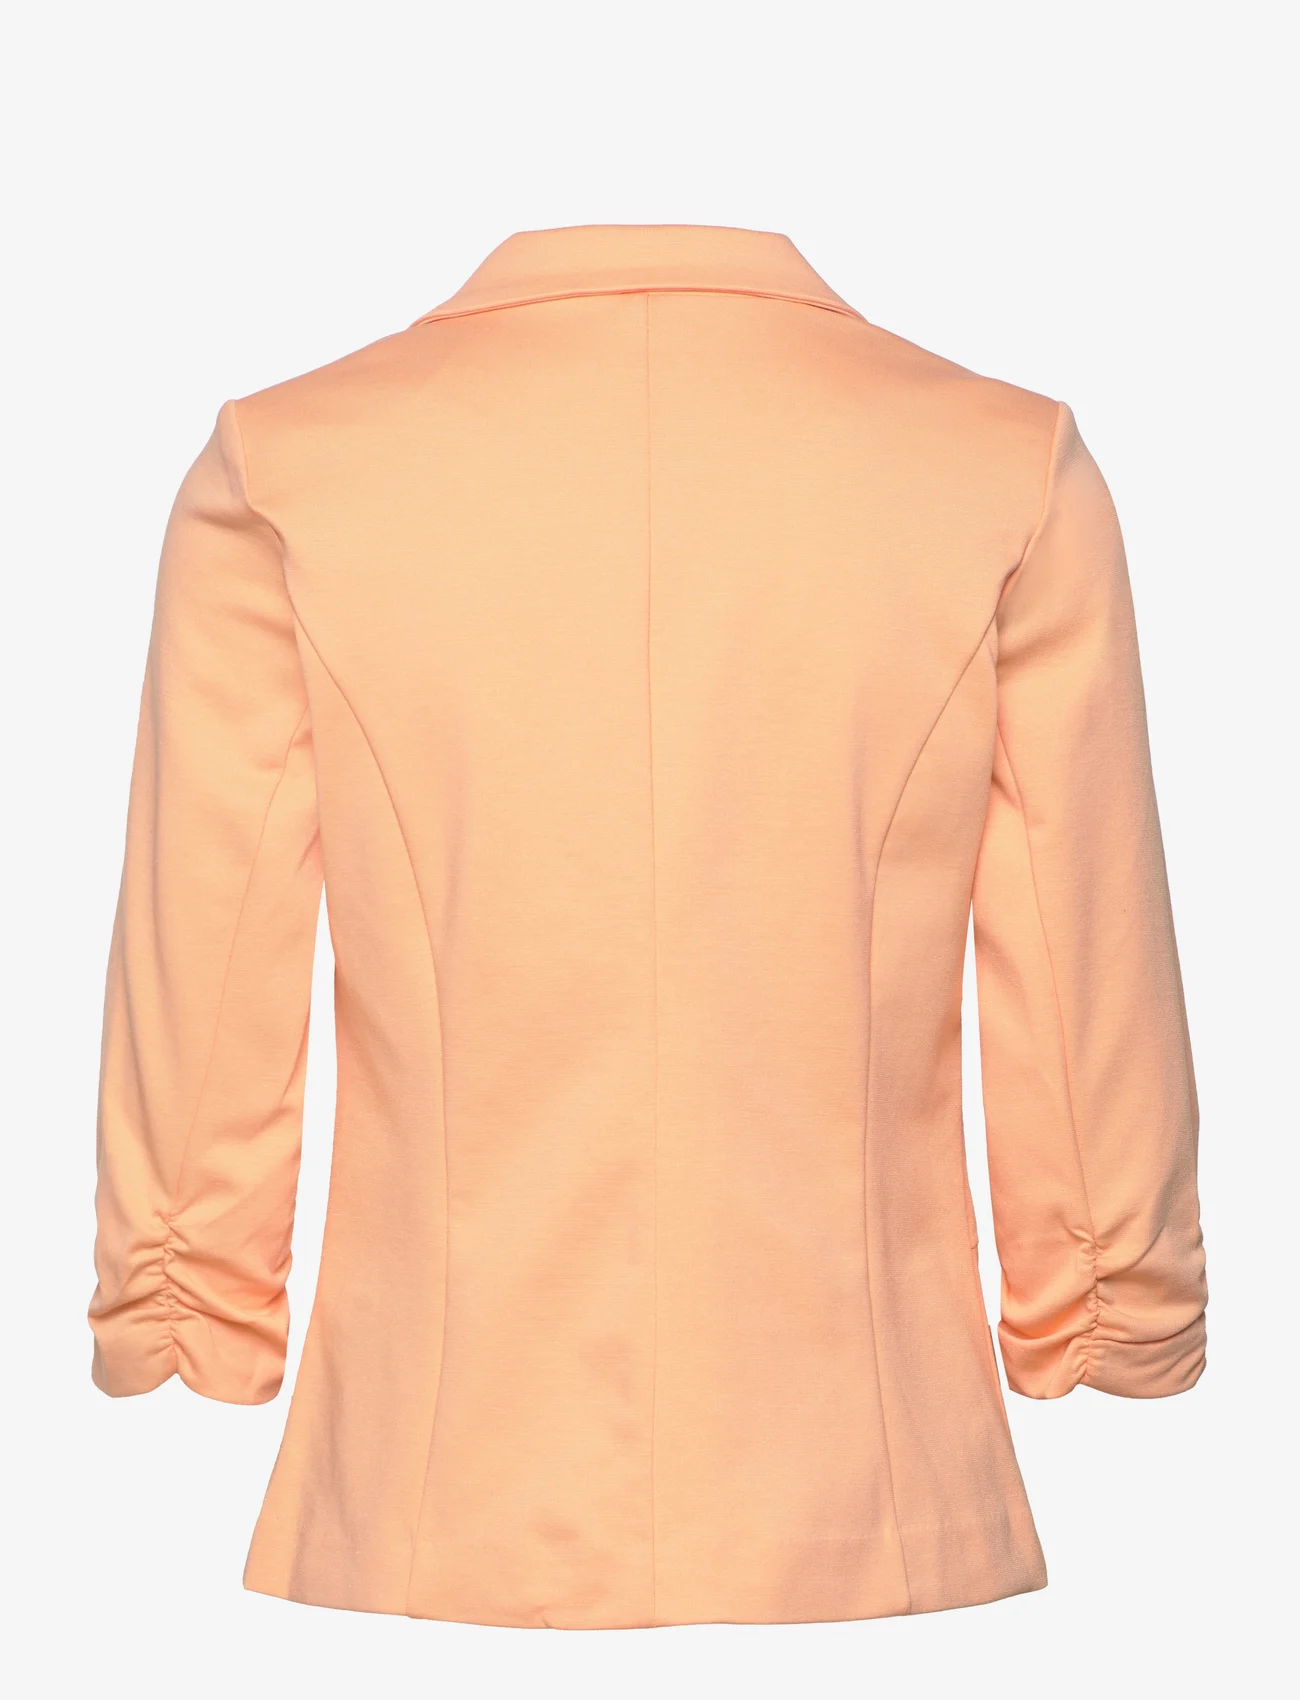 Fransa - FRZablazer 1 Blazer - feestelijke kleding voor outlet-prijzen - apricot wash - 1